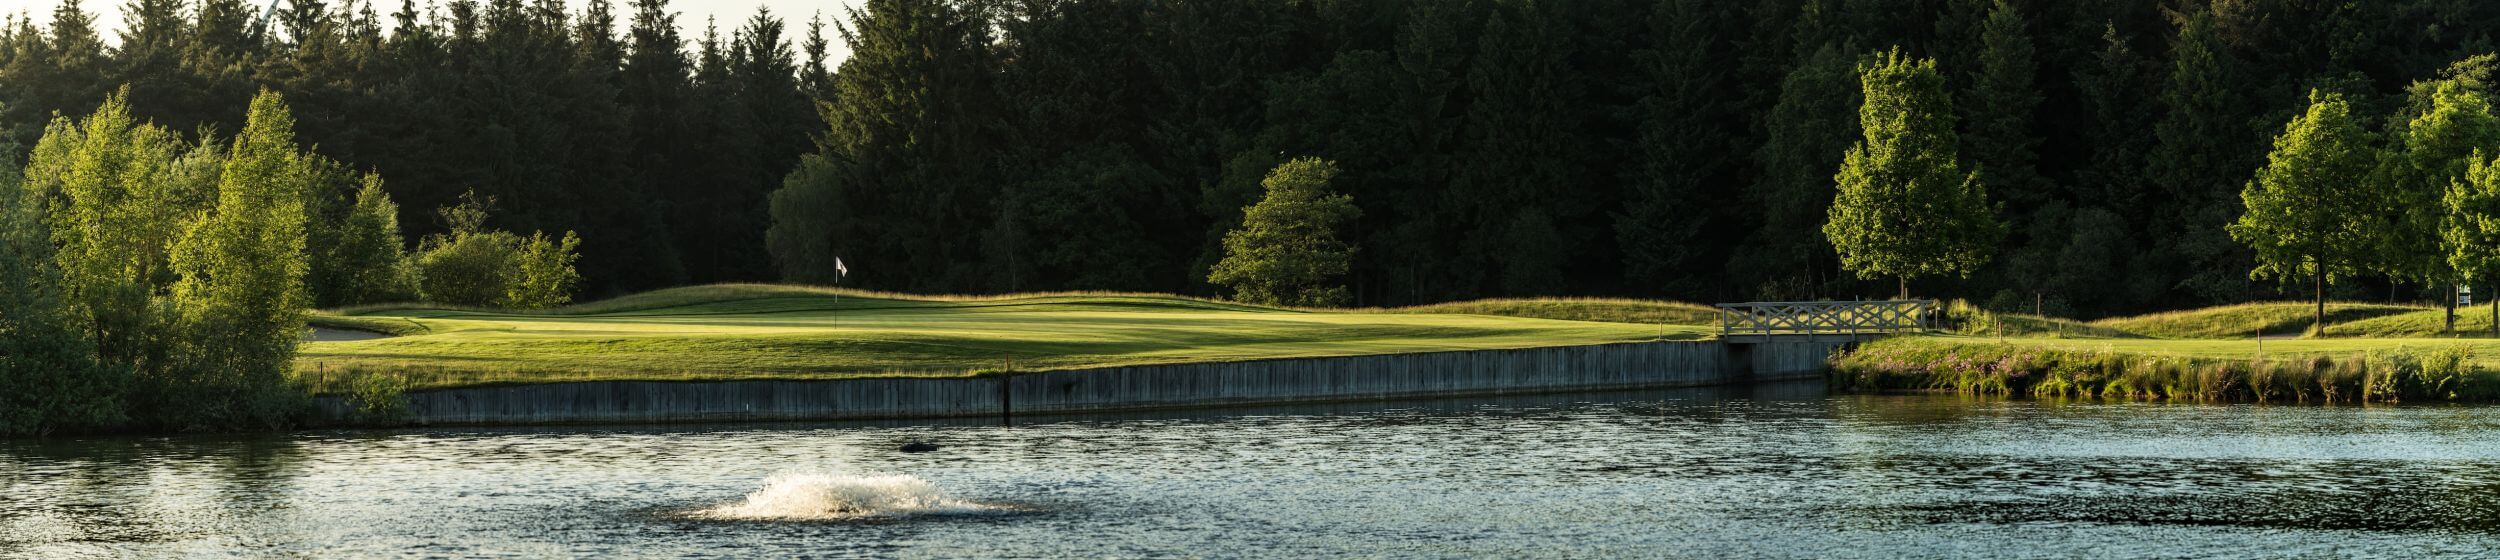 Golf-Club Lohersand Spielbahn